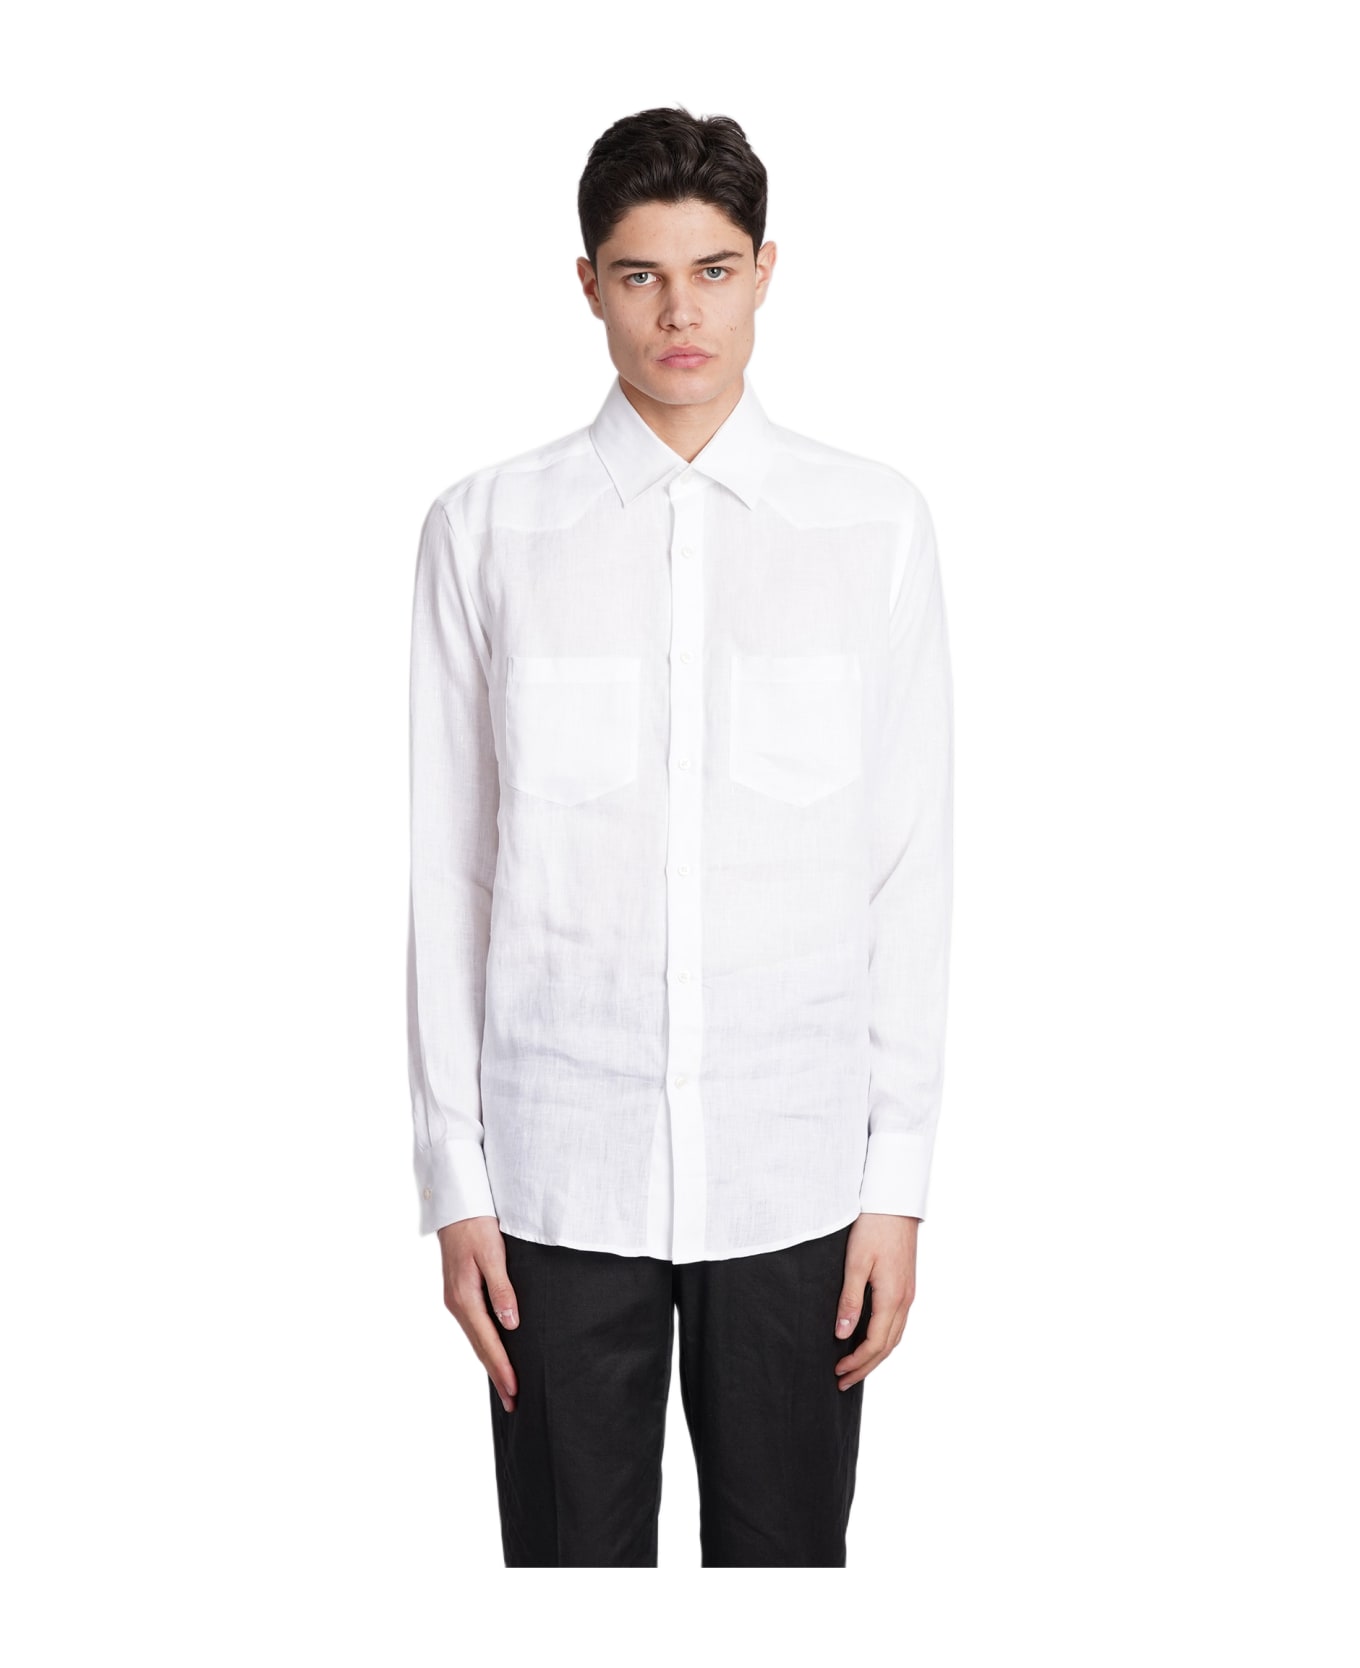 Low Brand Shirt S141 Shirt In White Linen - white